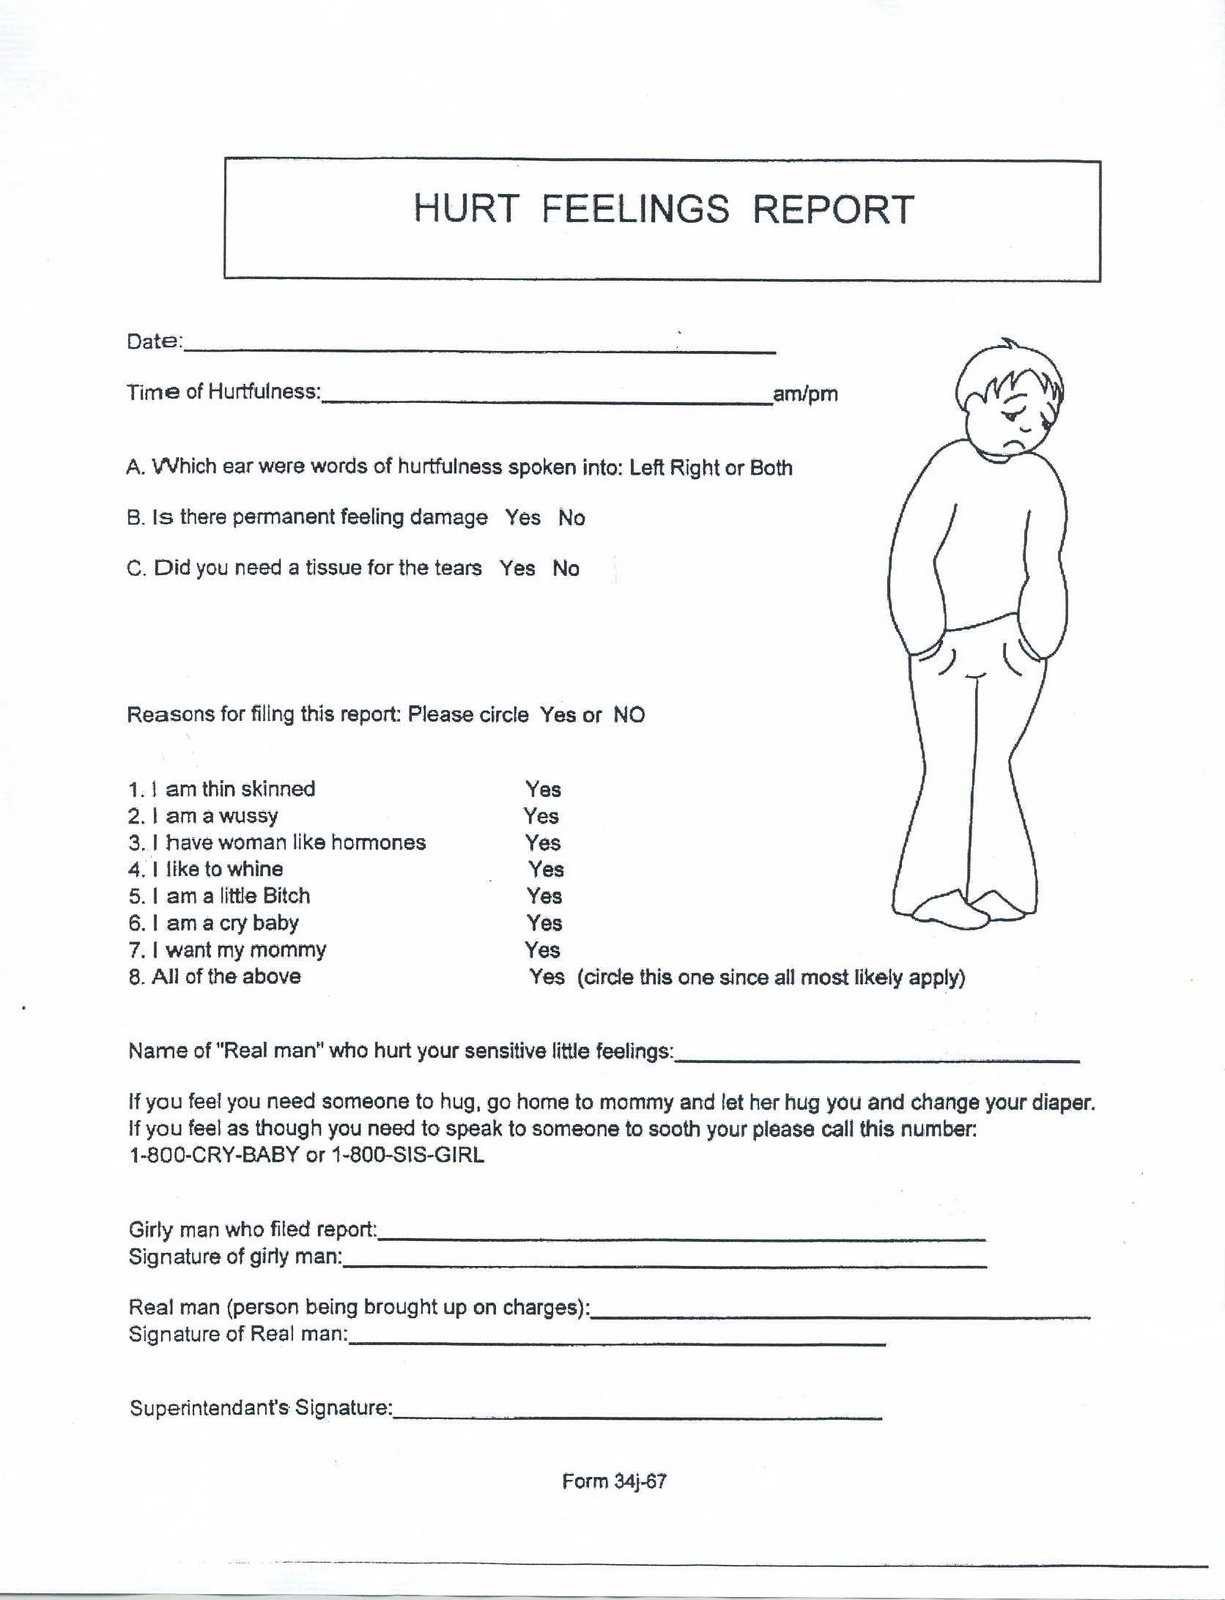 Hurt Feelings Report Template Best Professional Templates